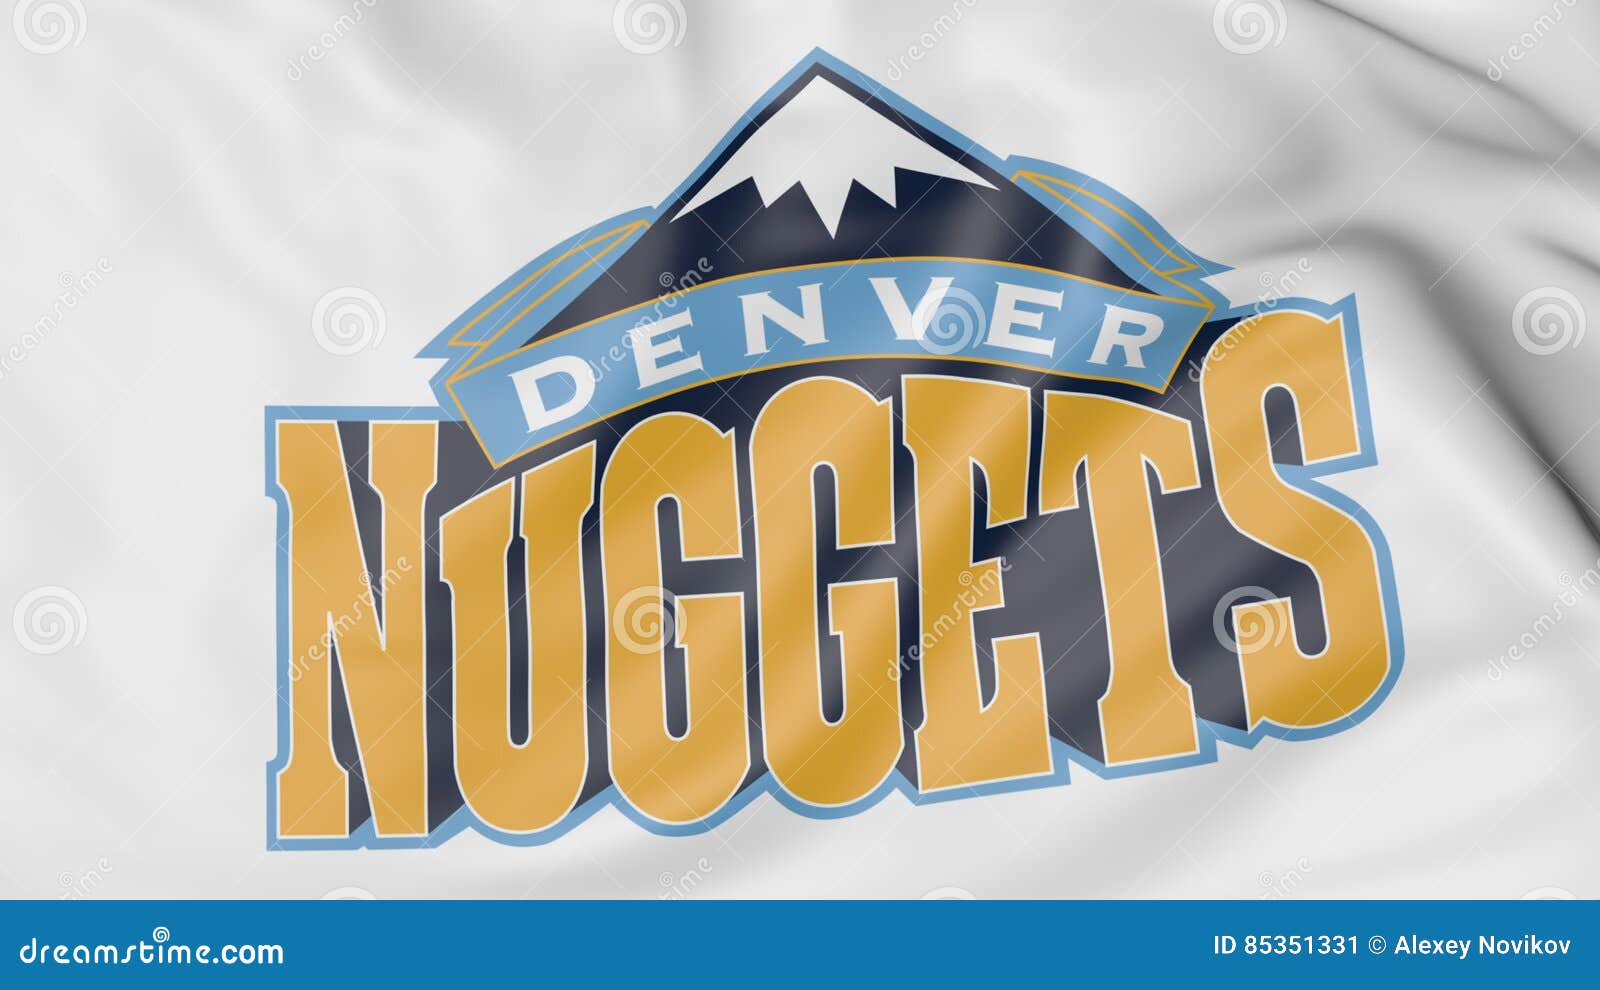 Denver Nuggets Primary Logo - National Basketball Association (NBA